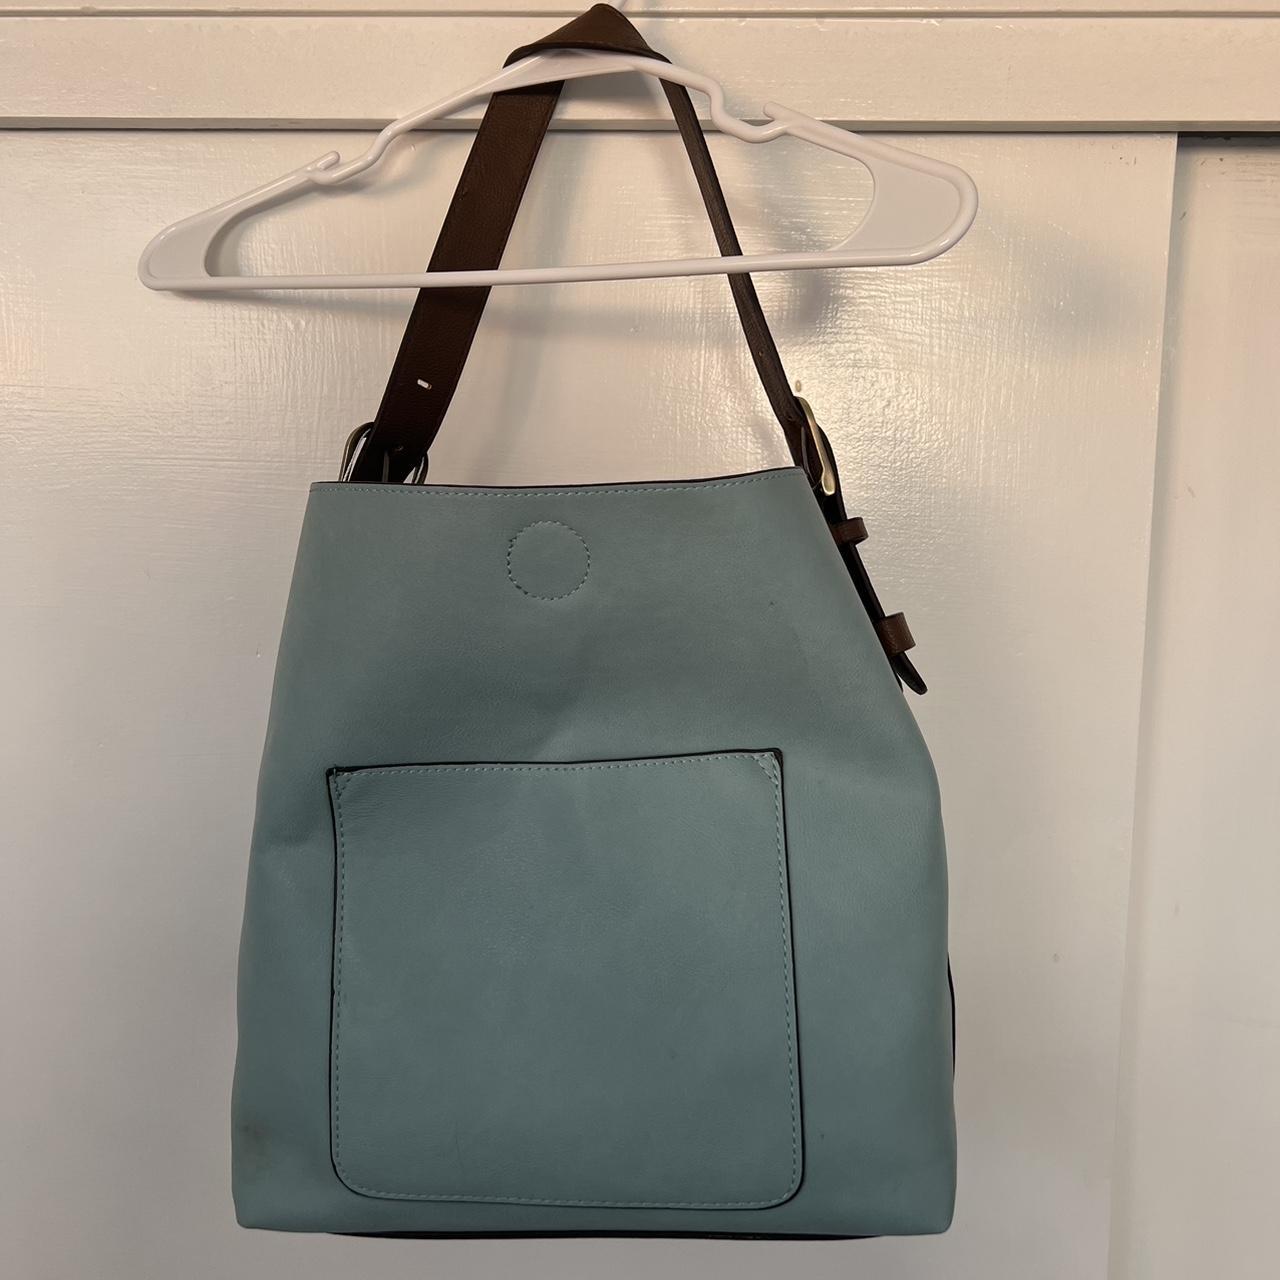 Joy Susan hobo bag purse vegan leather black tan classic | Hobo bag,  Leather, Purses and bags